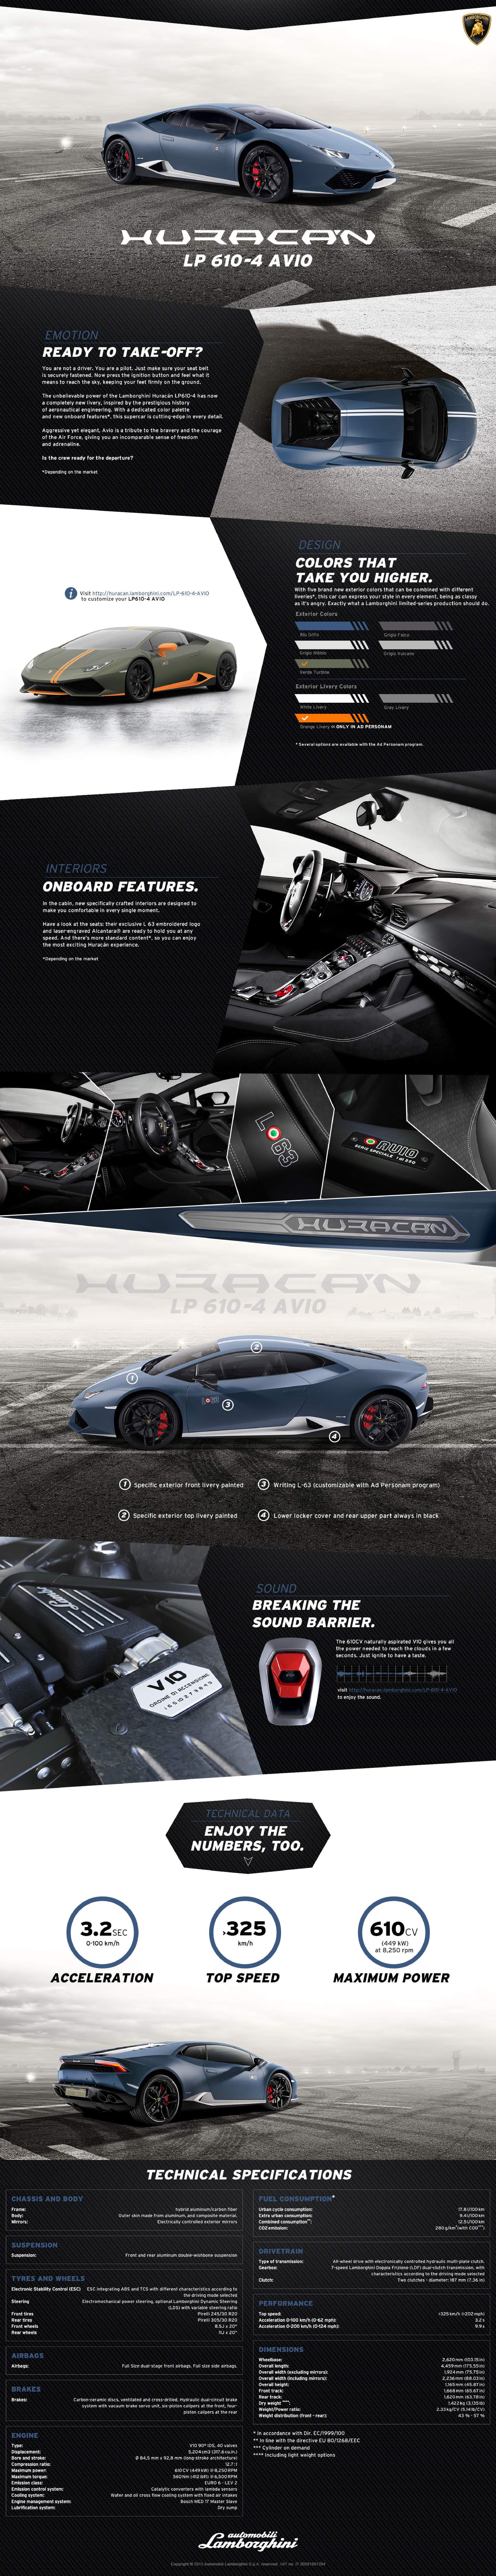 2017 Lamborghini Huracan LP 610-4 Avio Brochure Page 1